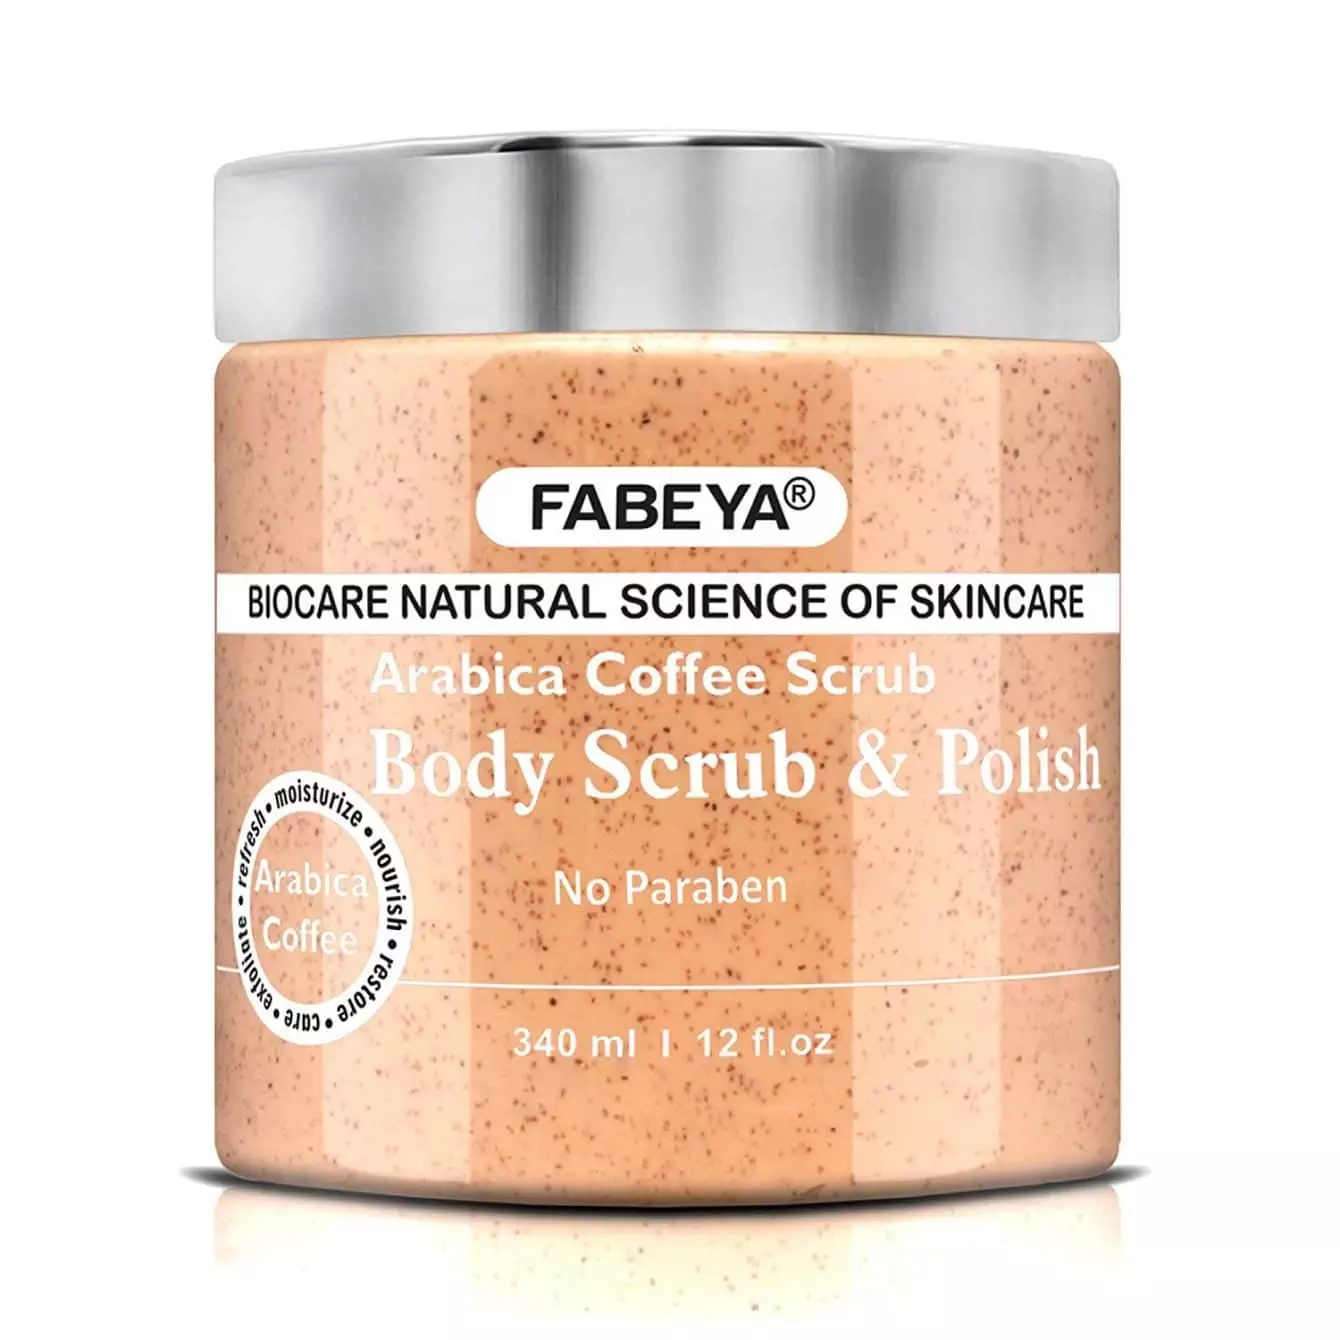 Fabeya Arabica coffee body scrub and polish Review